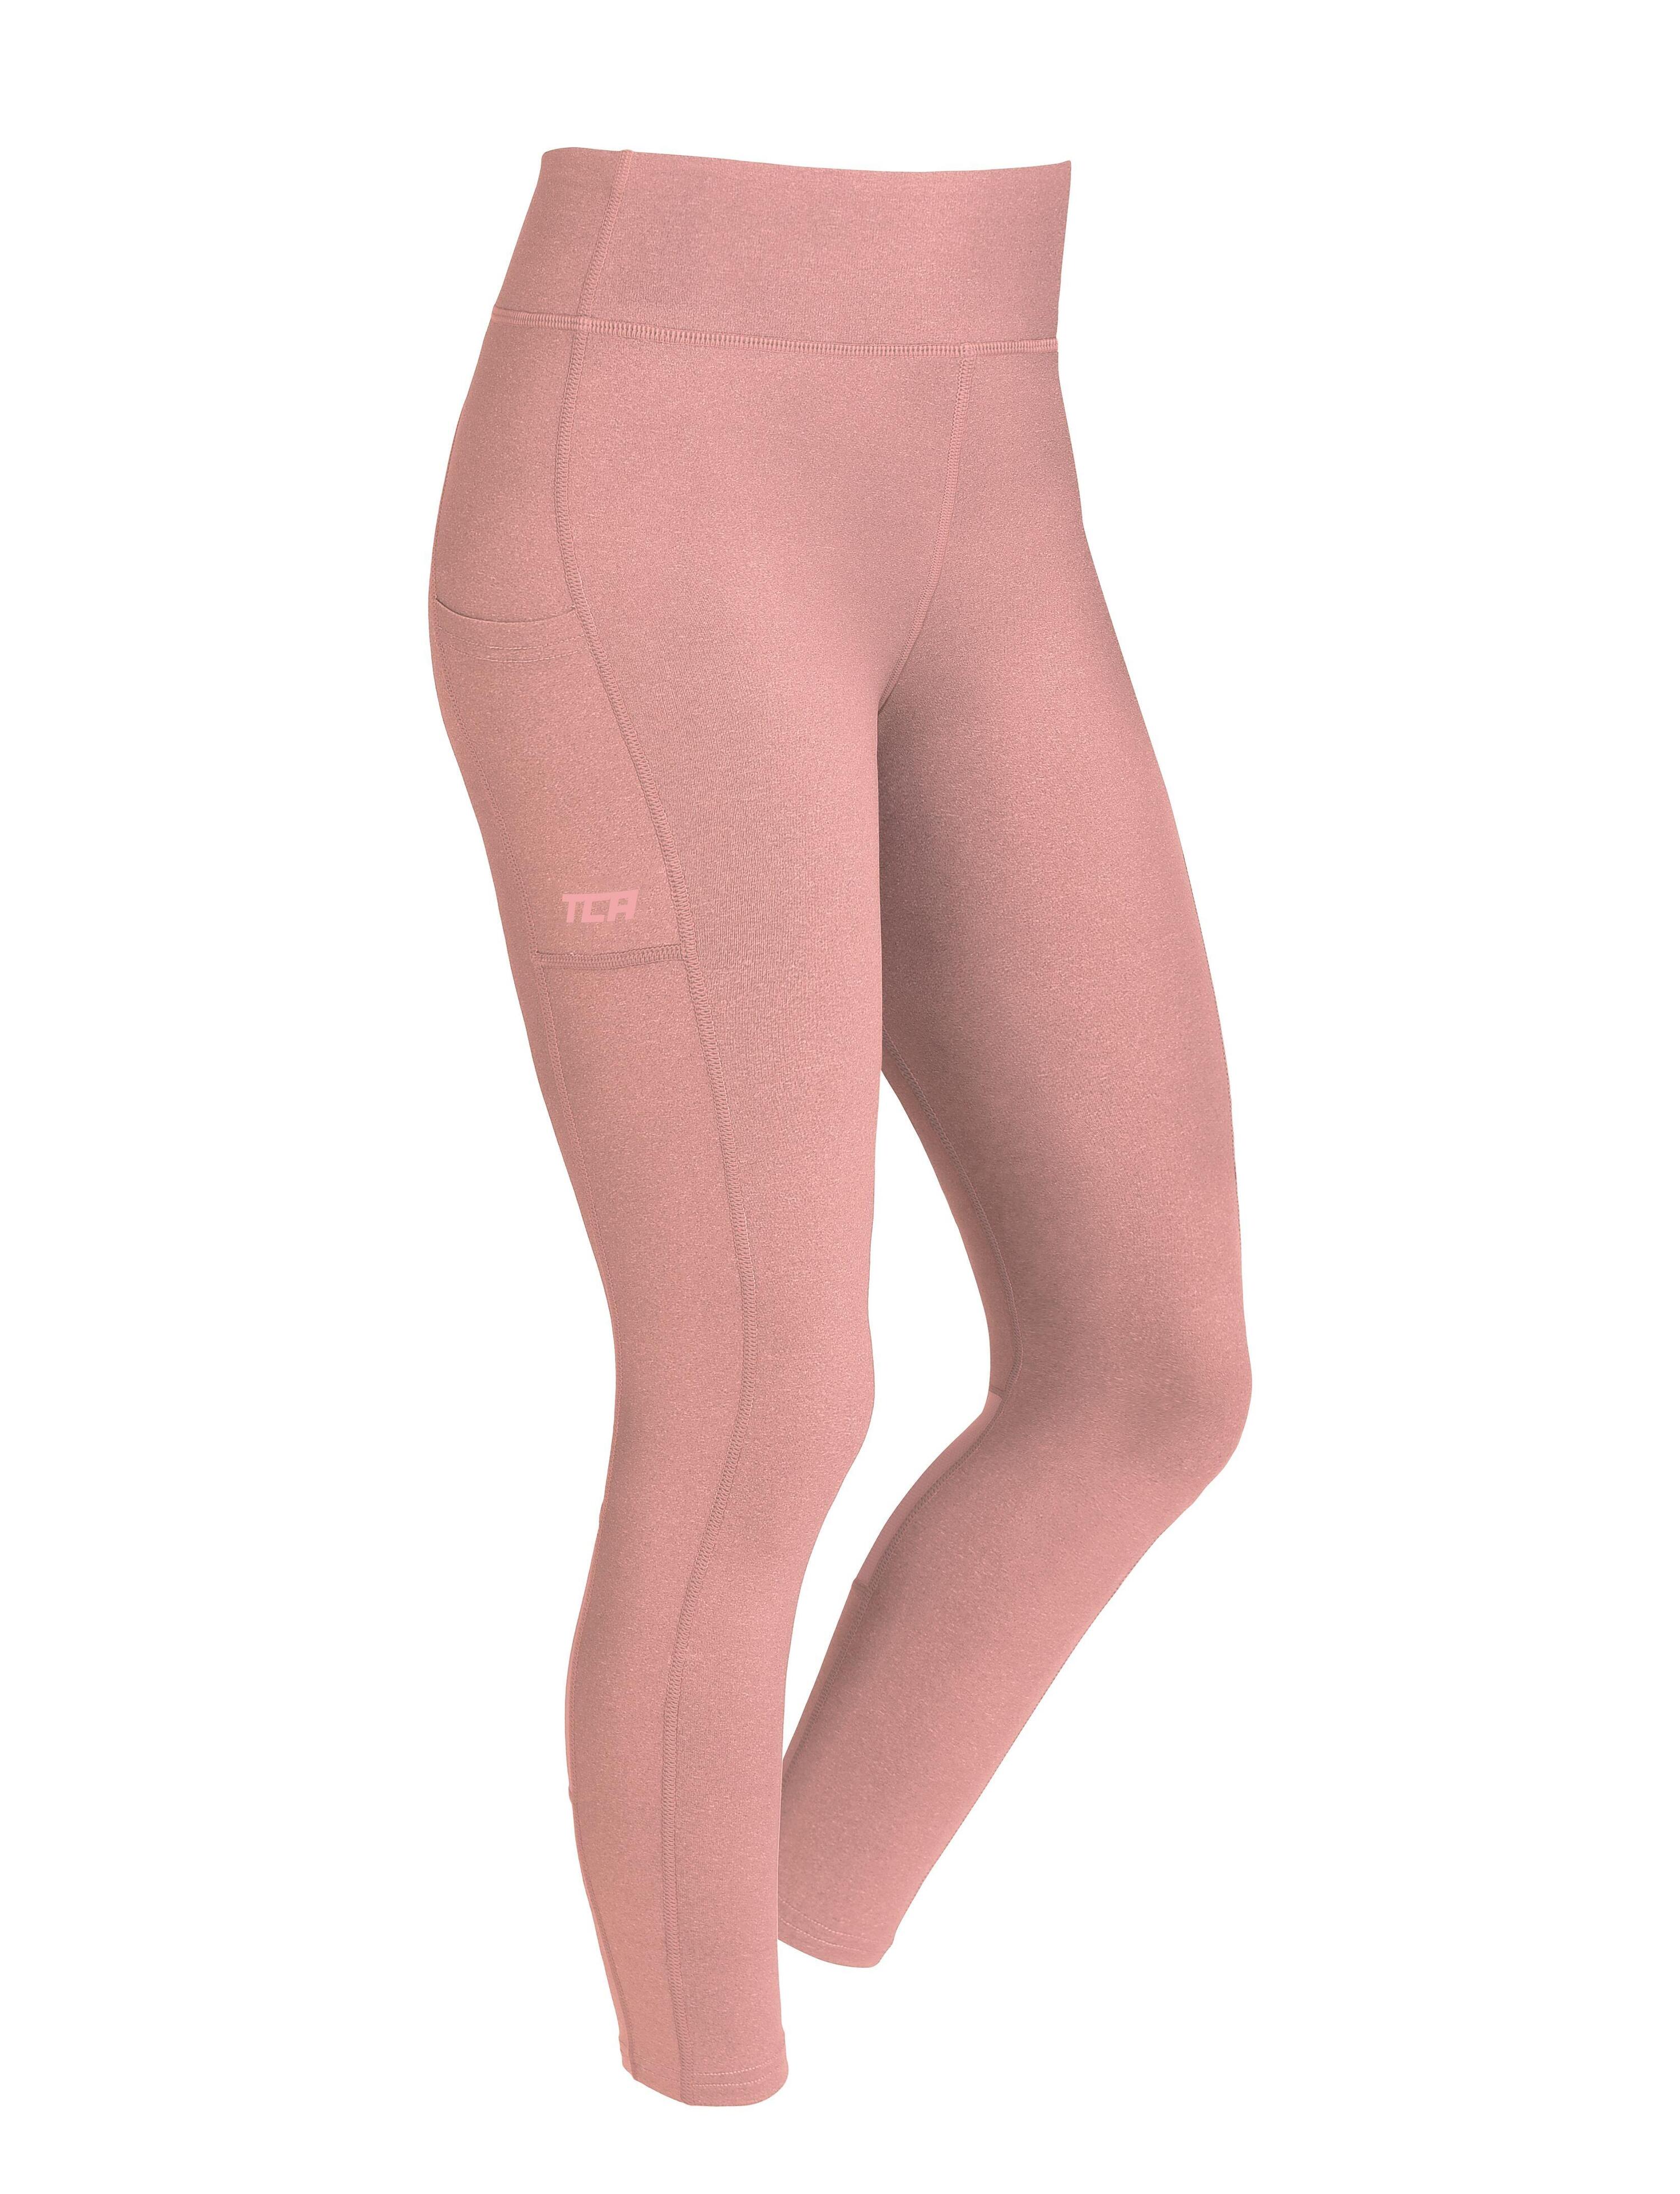 TCA Girls' Super Thermal Base Layer Leggings - Silver Pink Marl